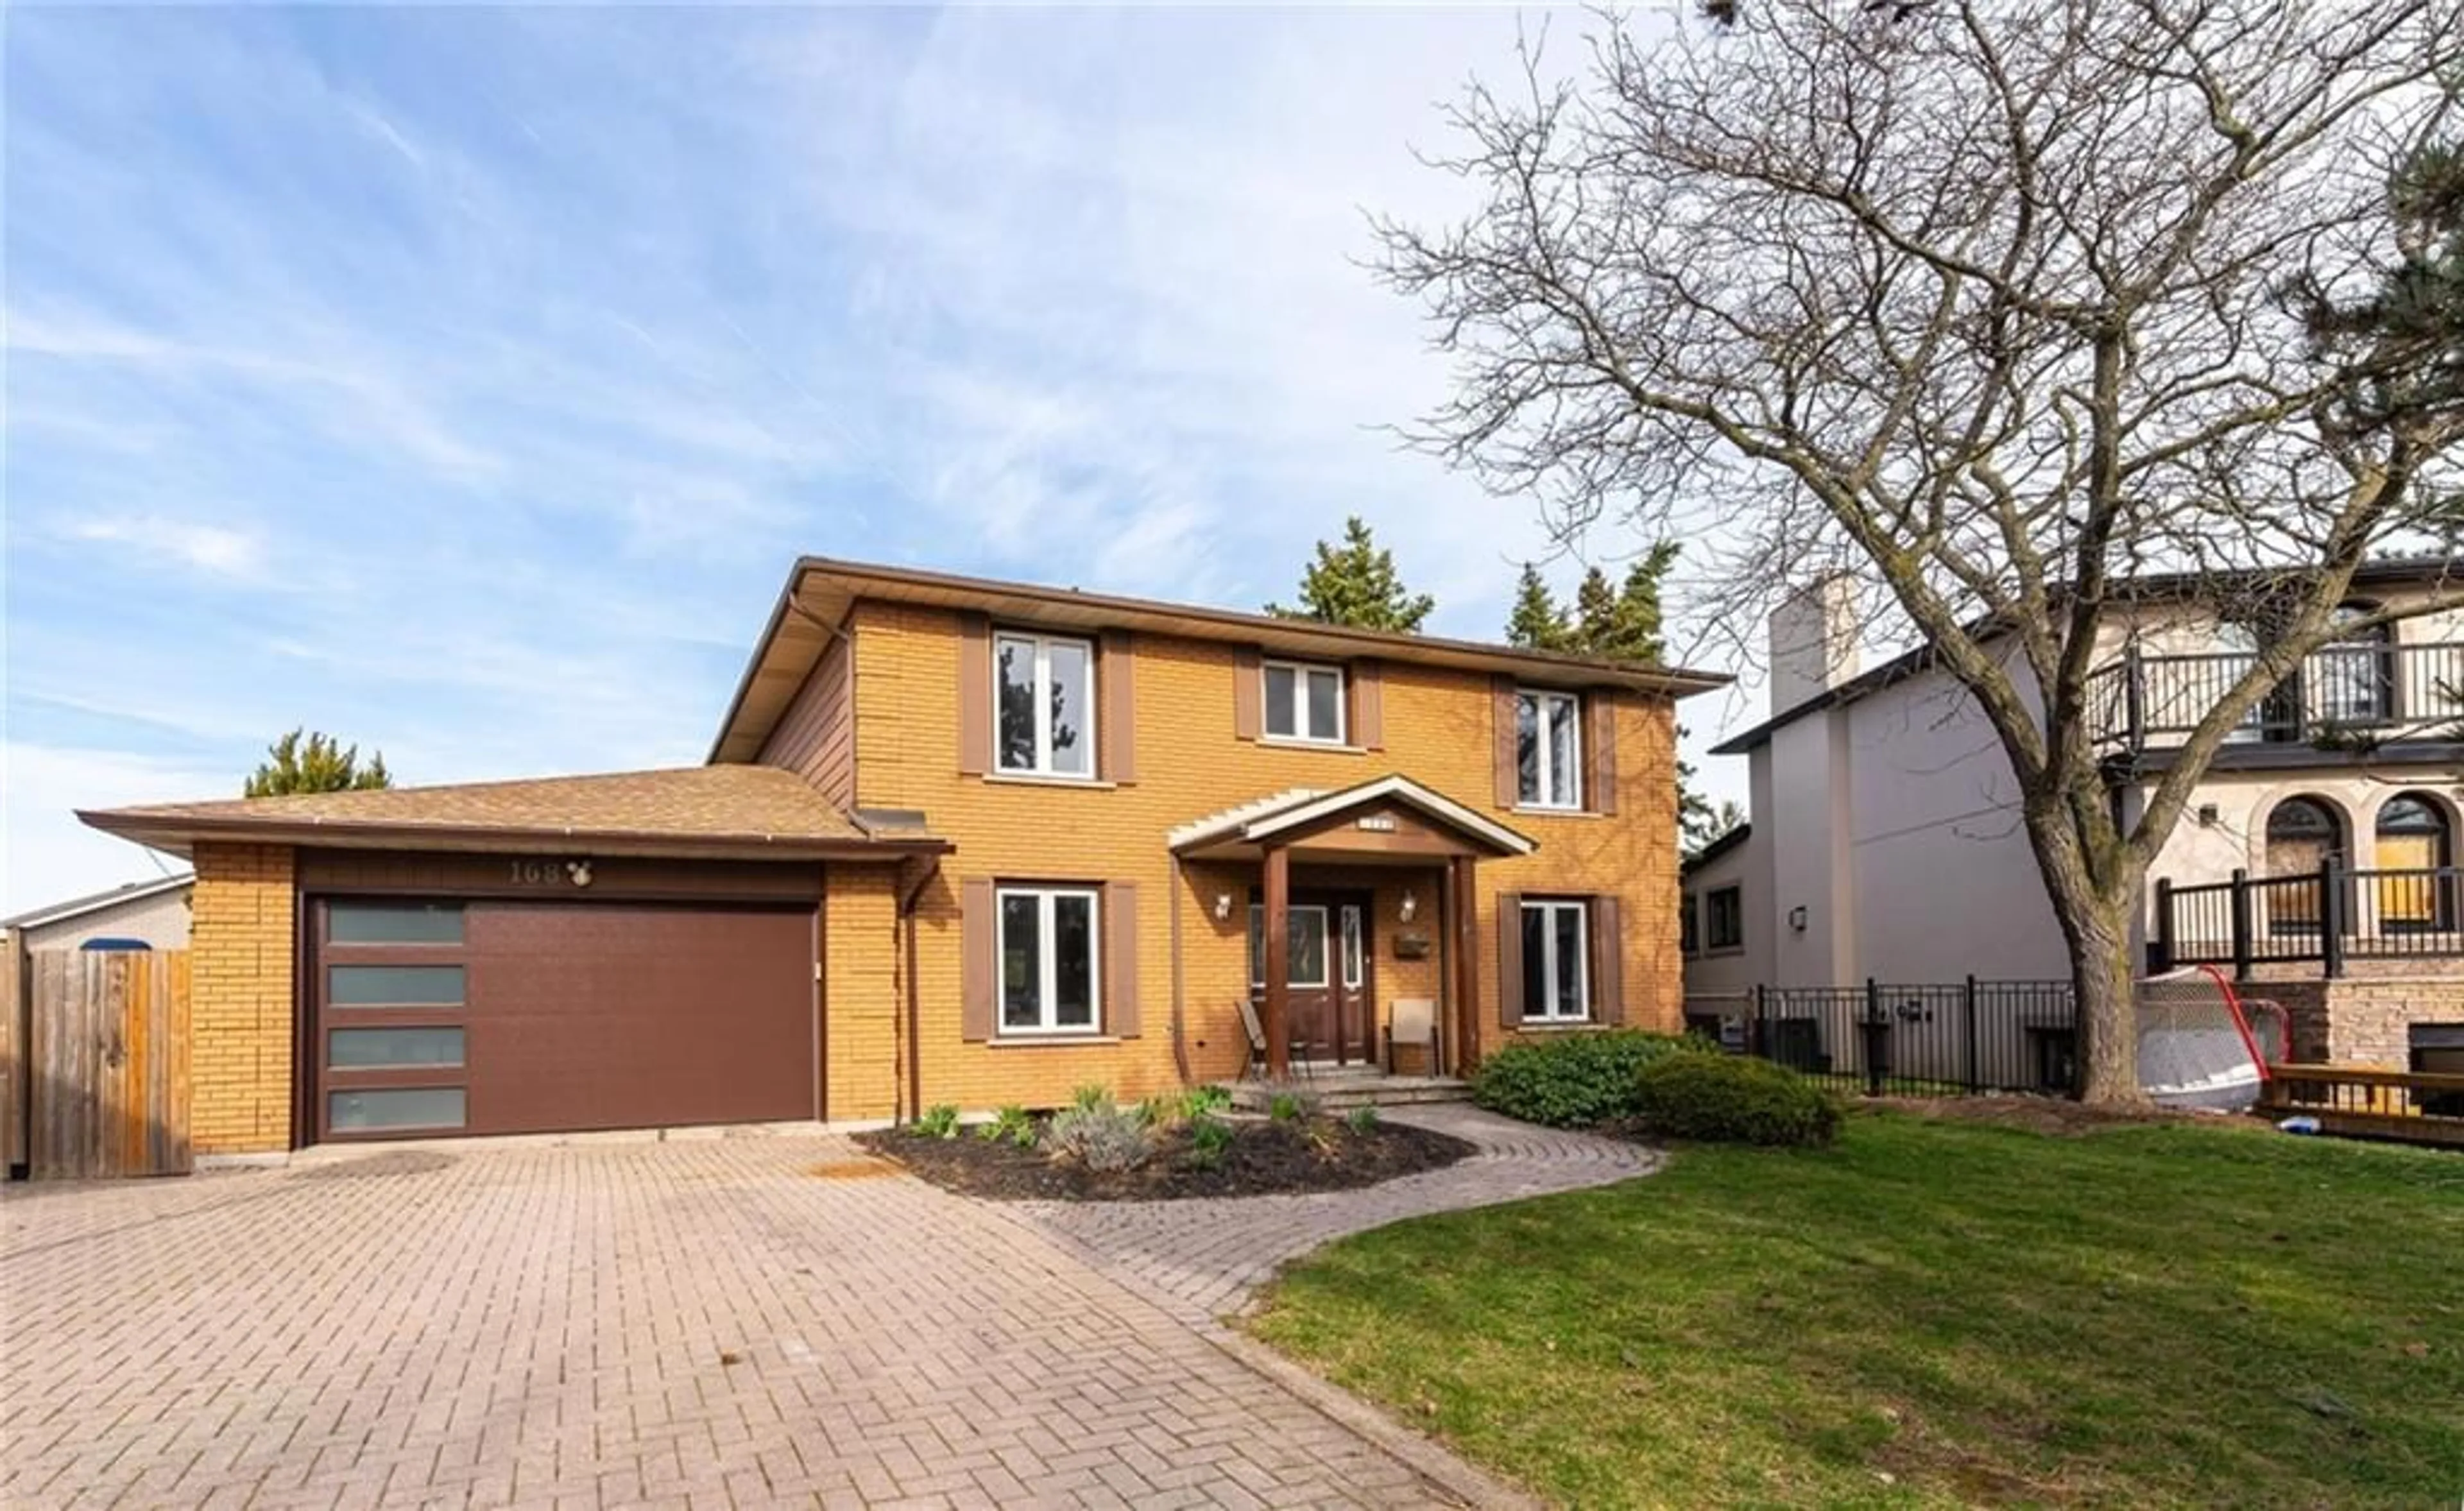 Home with brick exterior material for 168 ALBION FALLS Blvd, Hamilton Ontario L8W 1R6